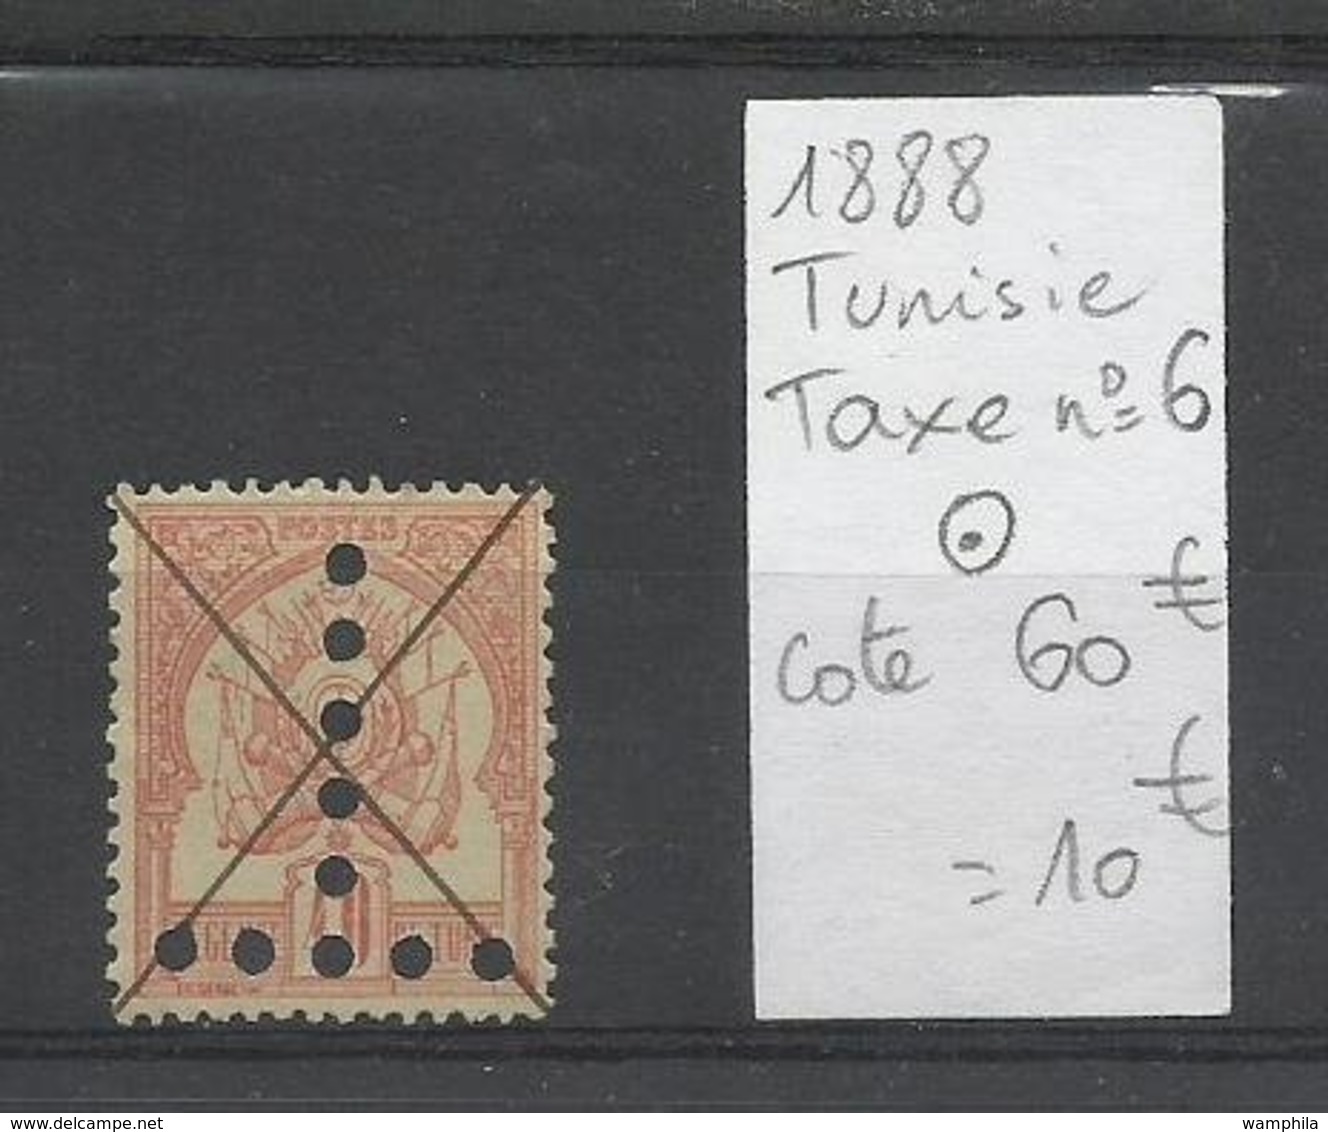 1888 Tunisie, Taxe N° 6 Oblitéré, Cote 60€ - Impuestos